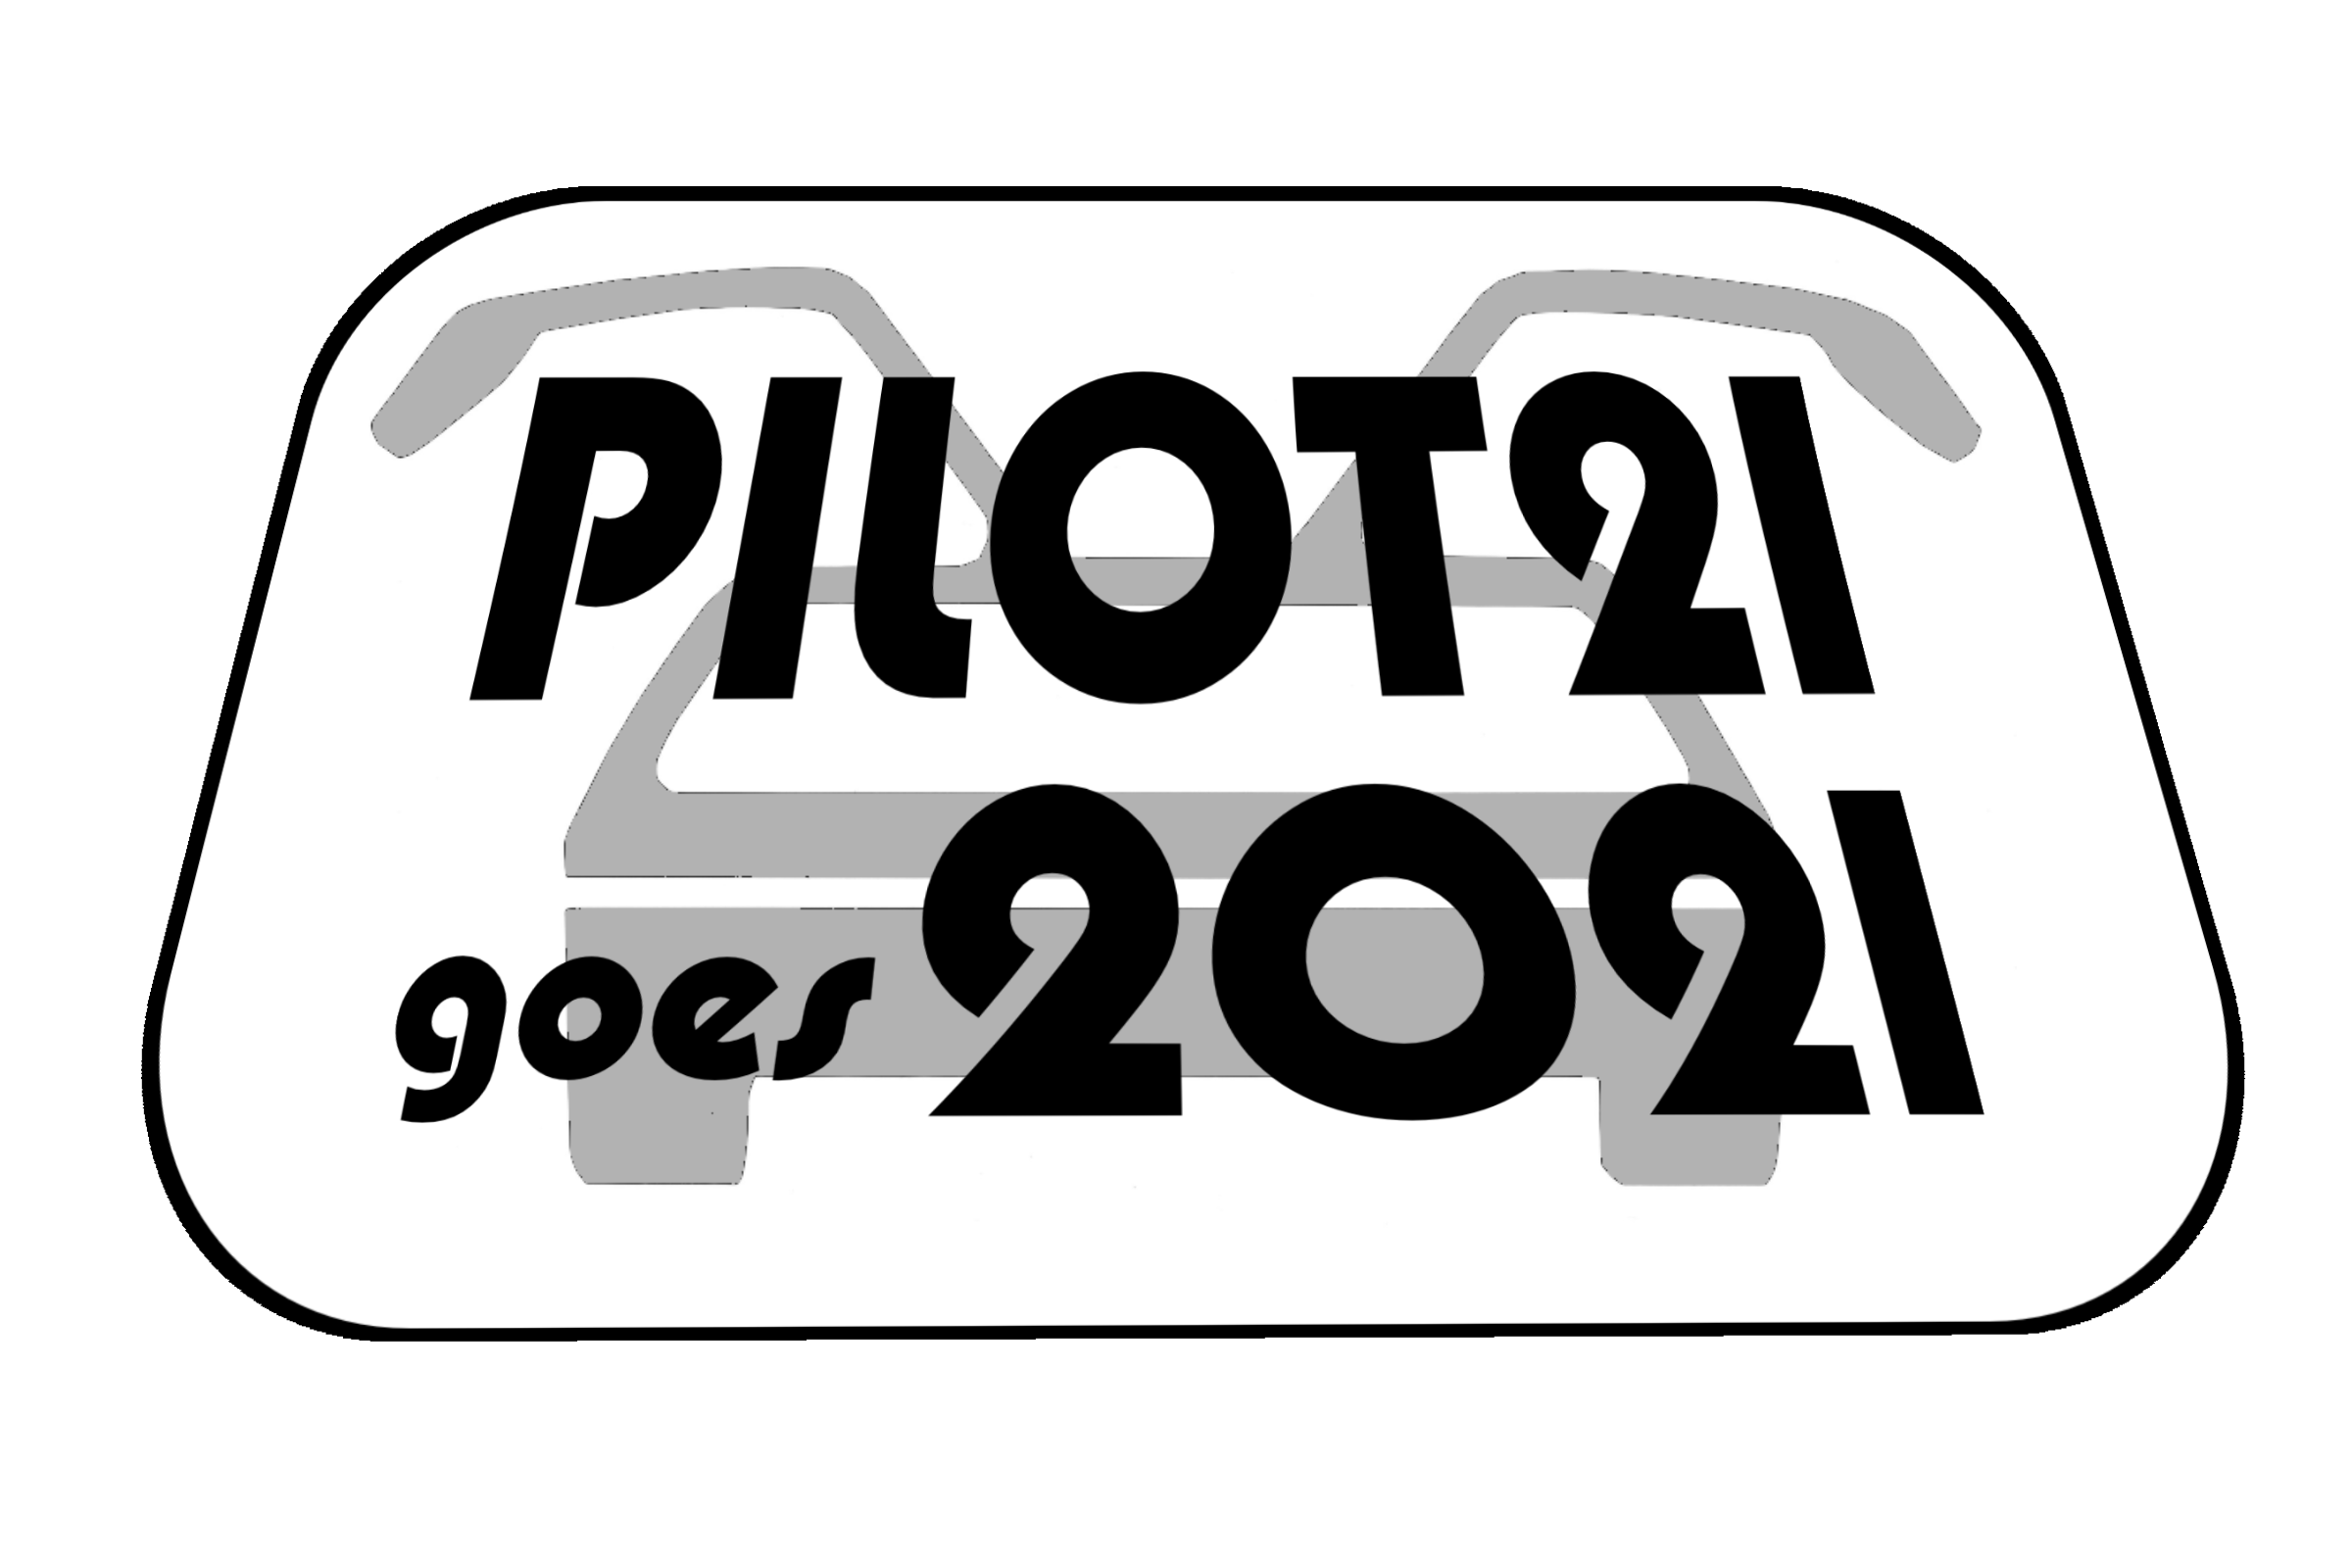 PILOT21goes2021